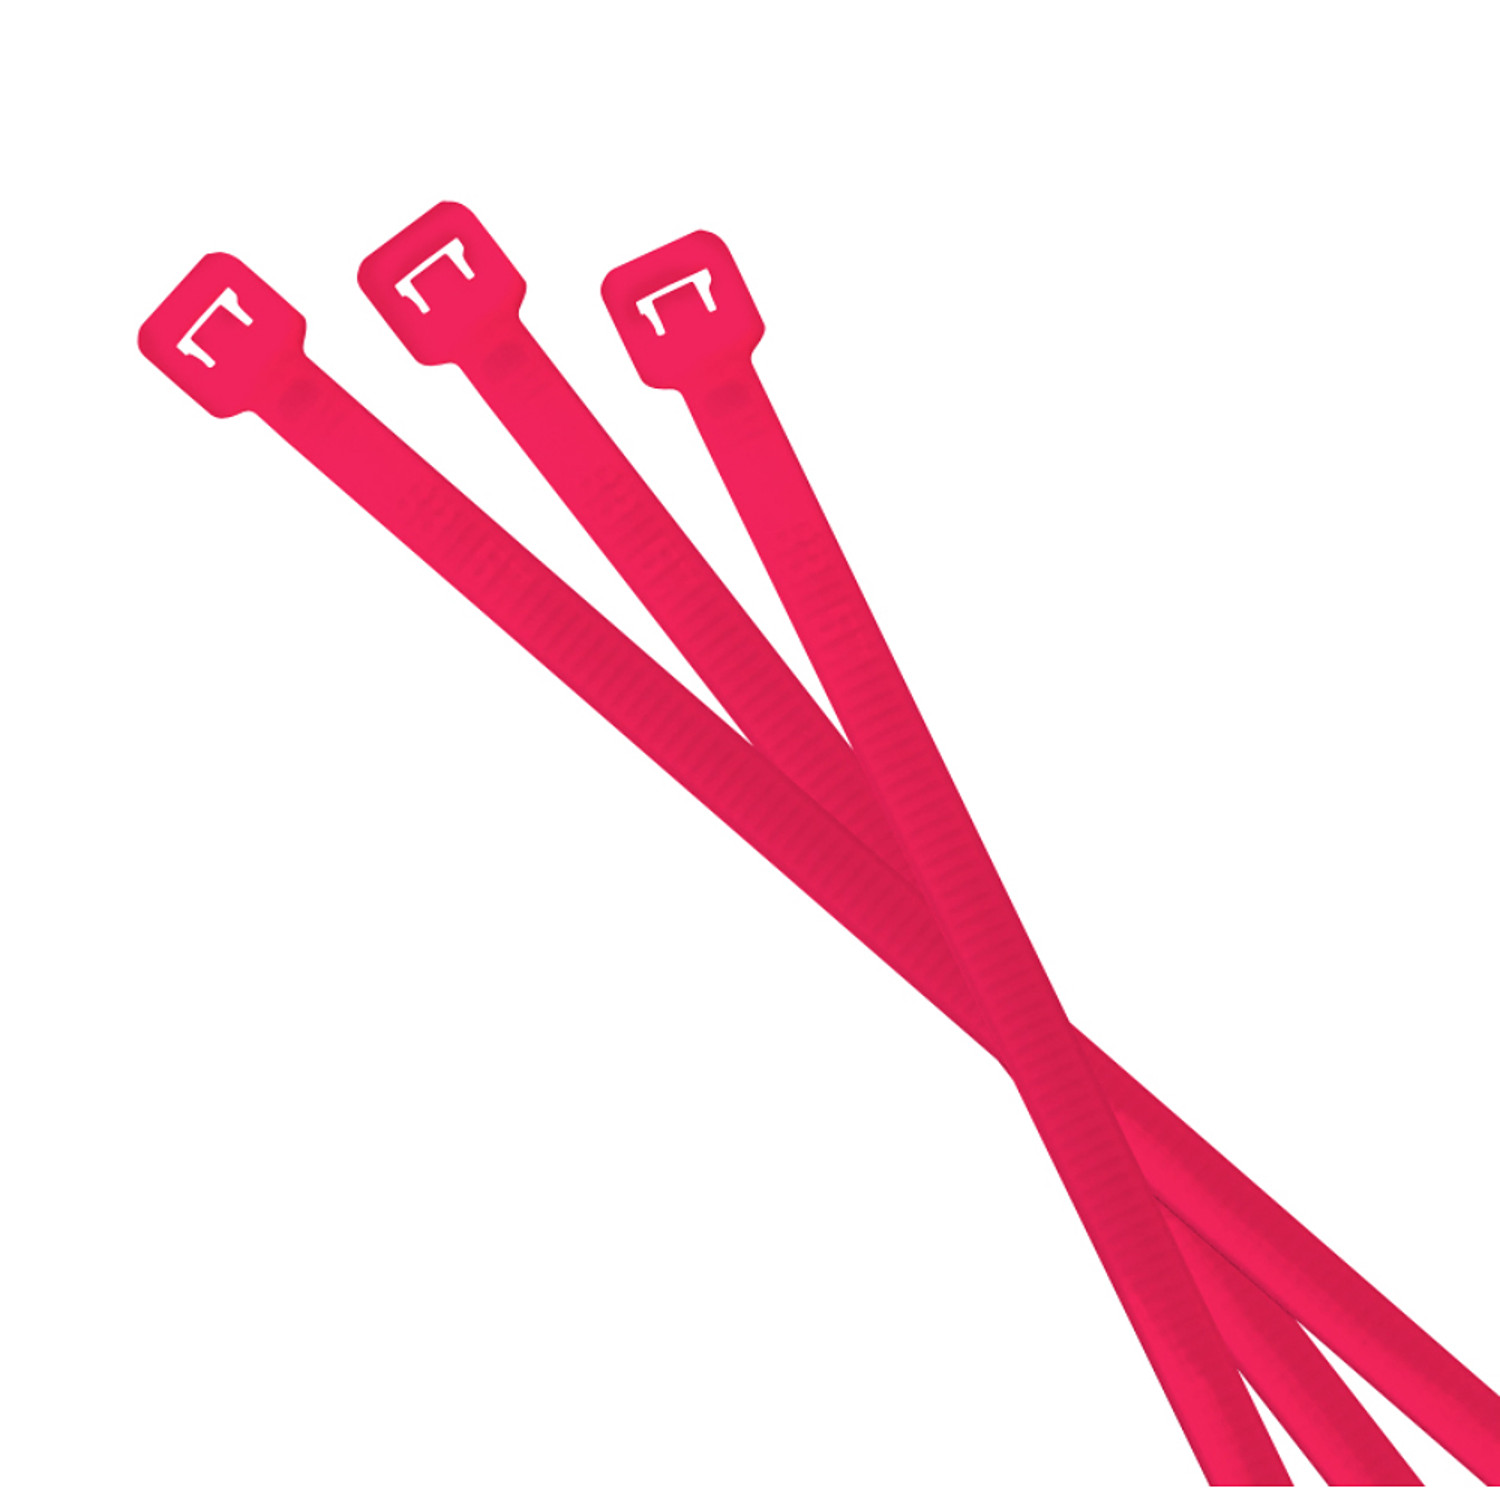 Riesel Design Cable Tie Cable:tie Neon Pink, 25 Pieces